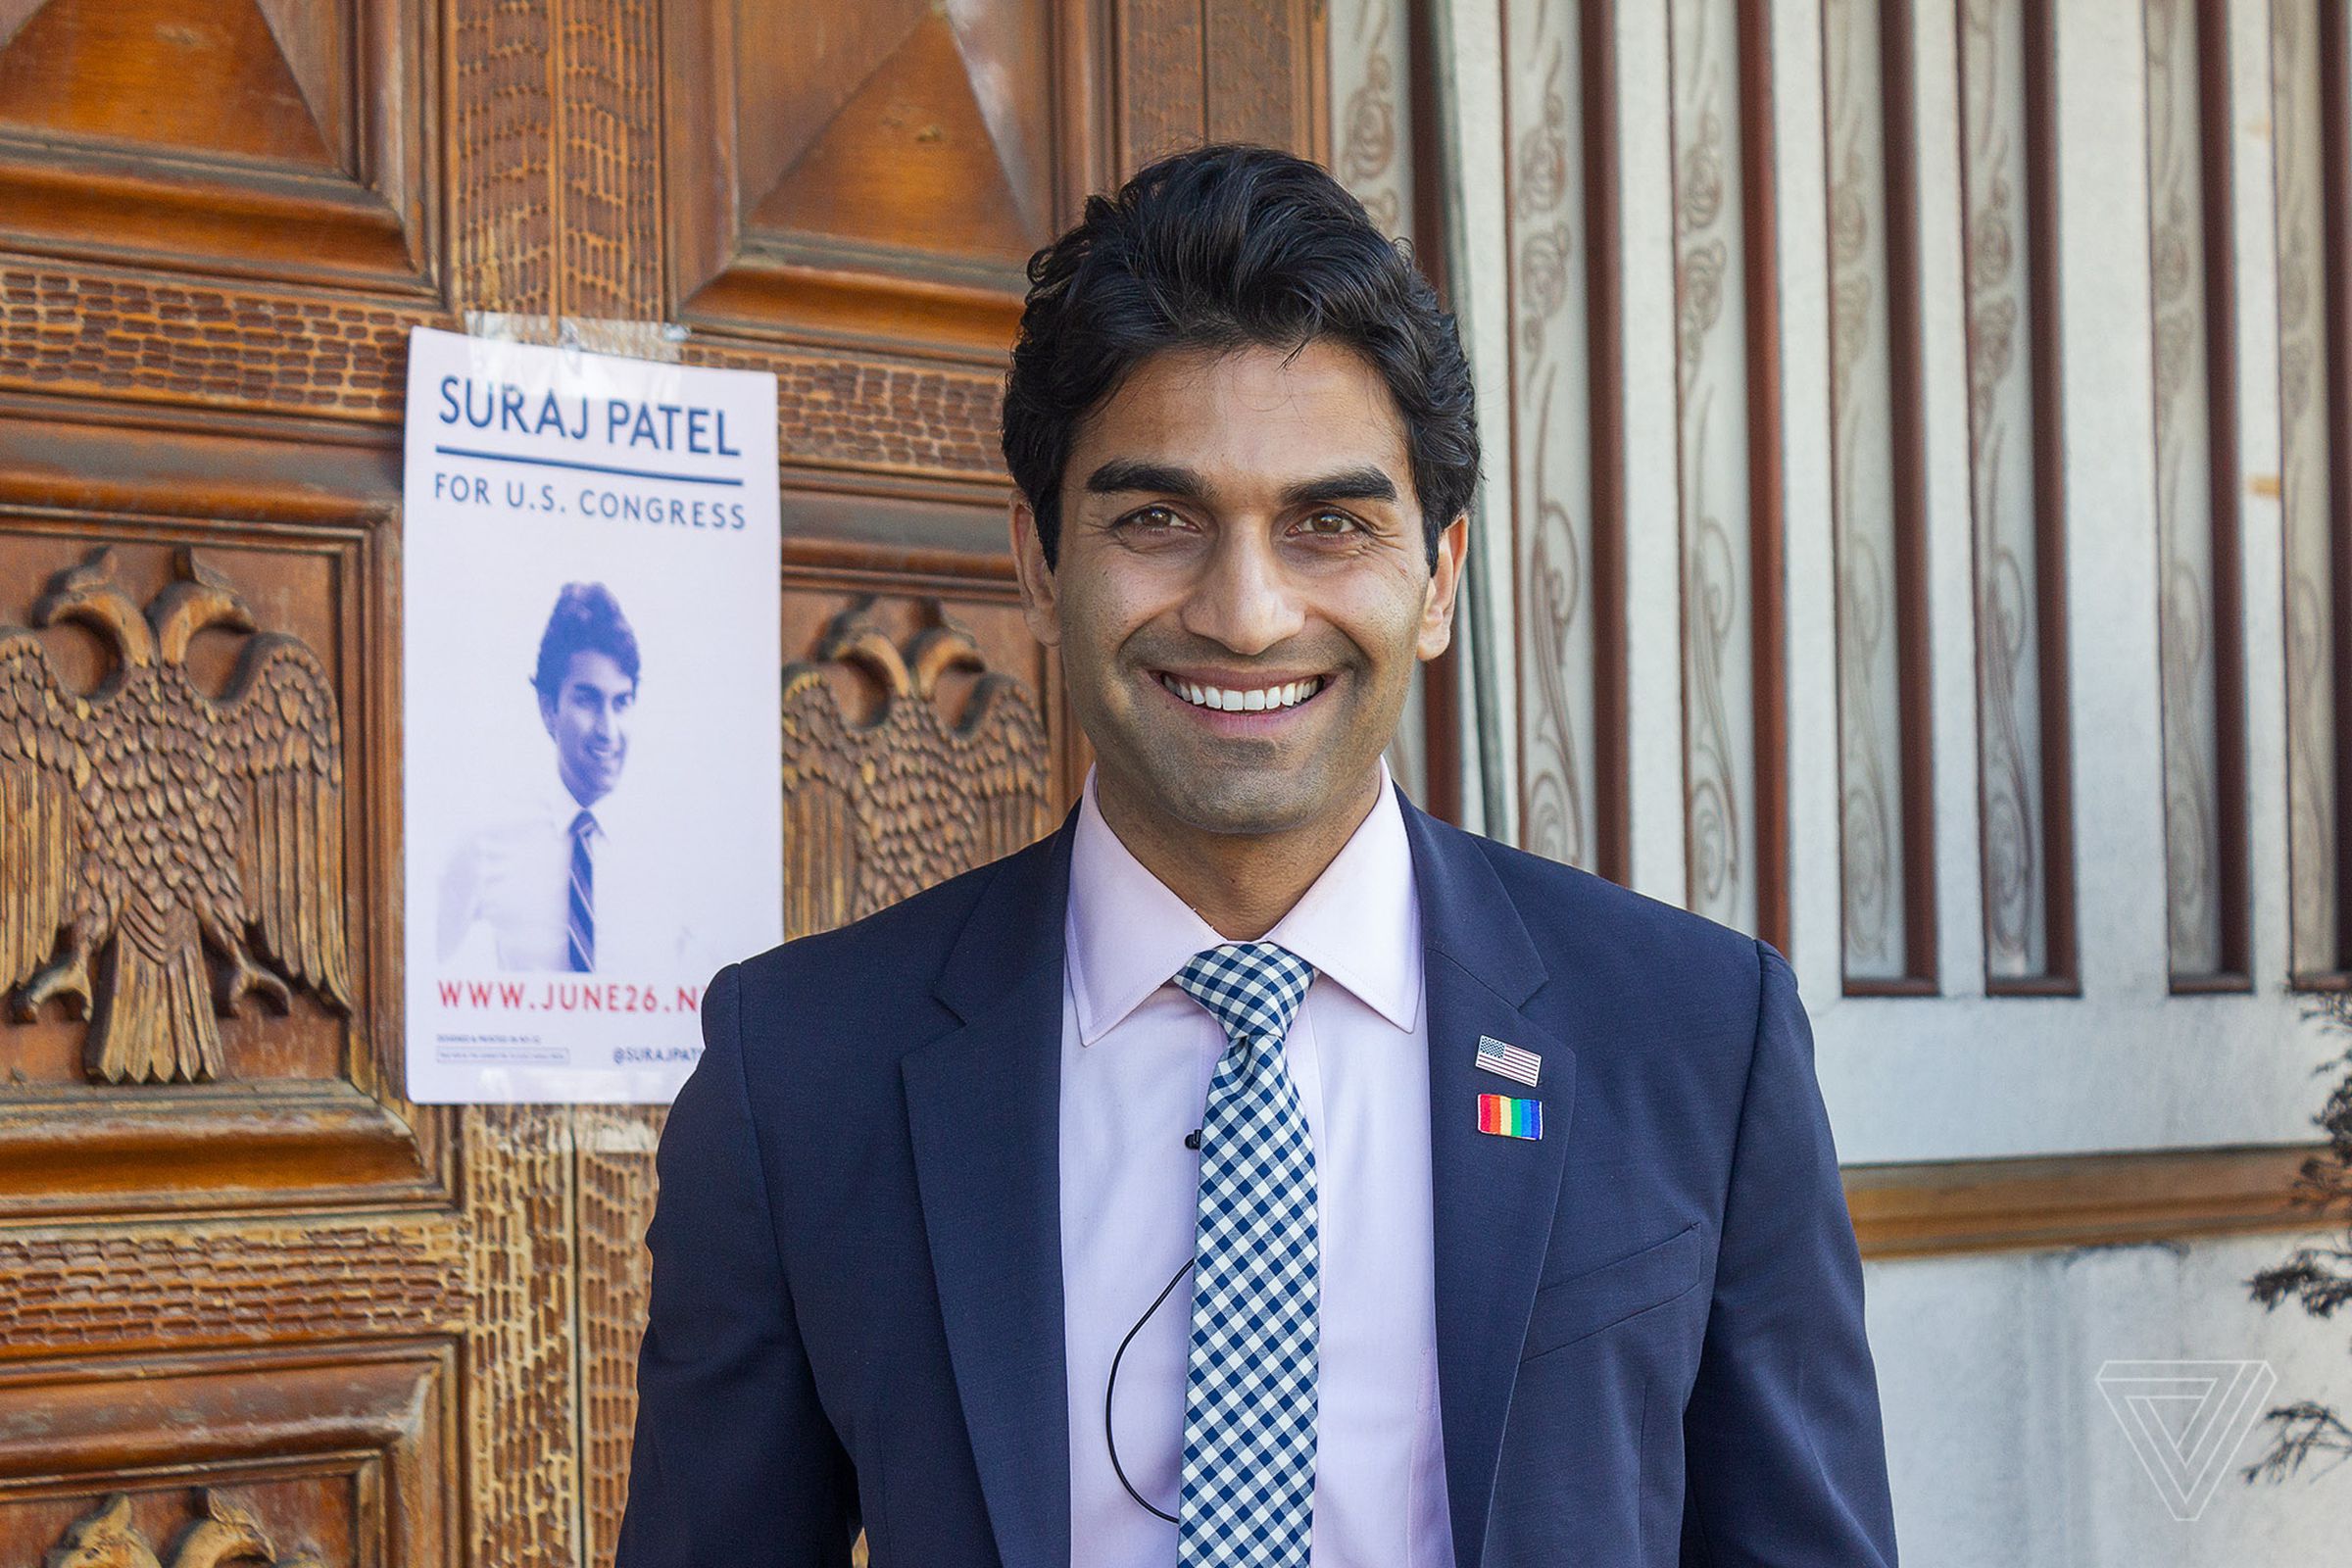 Congressional candidate Suraj Patel